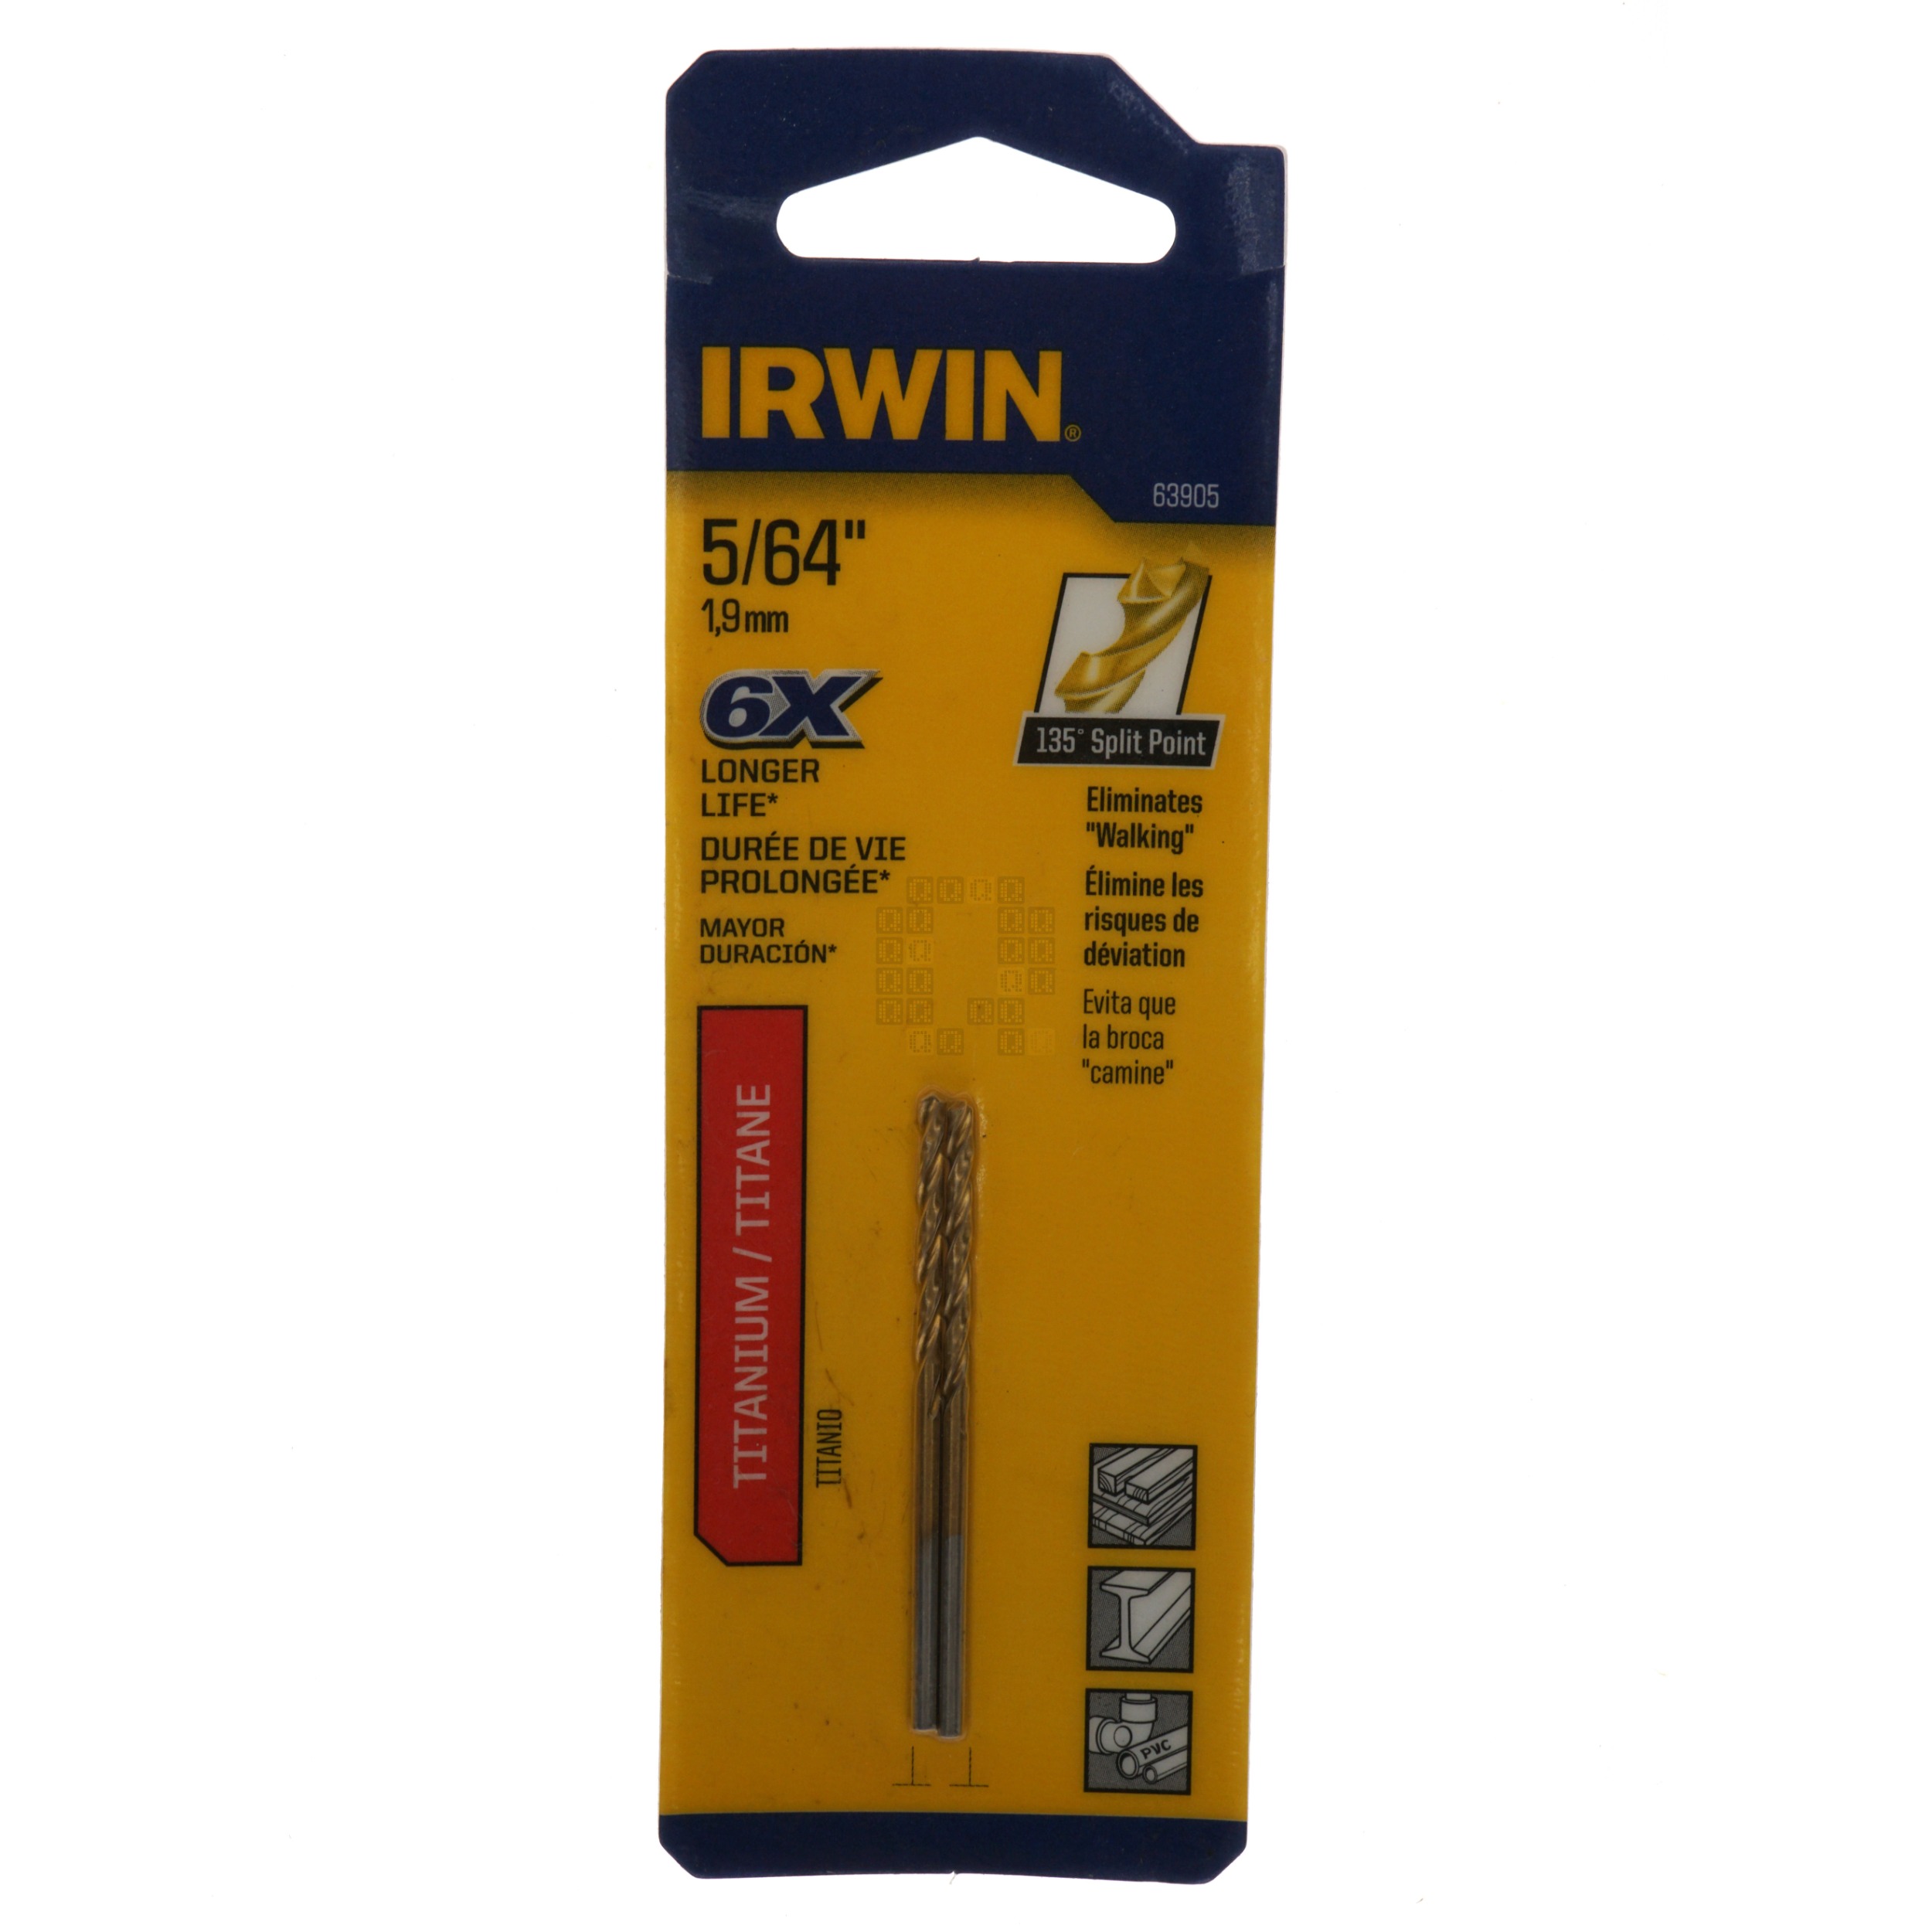 Irwin 63905 5/64" Titanium Nitride Coated 135° Split Point Drill Bits, 2-Pack